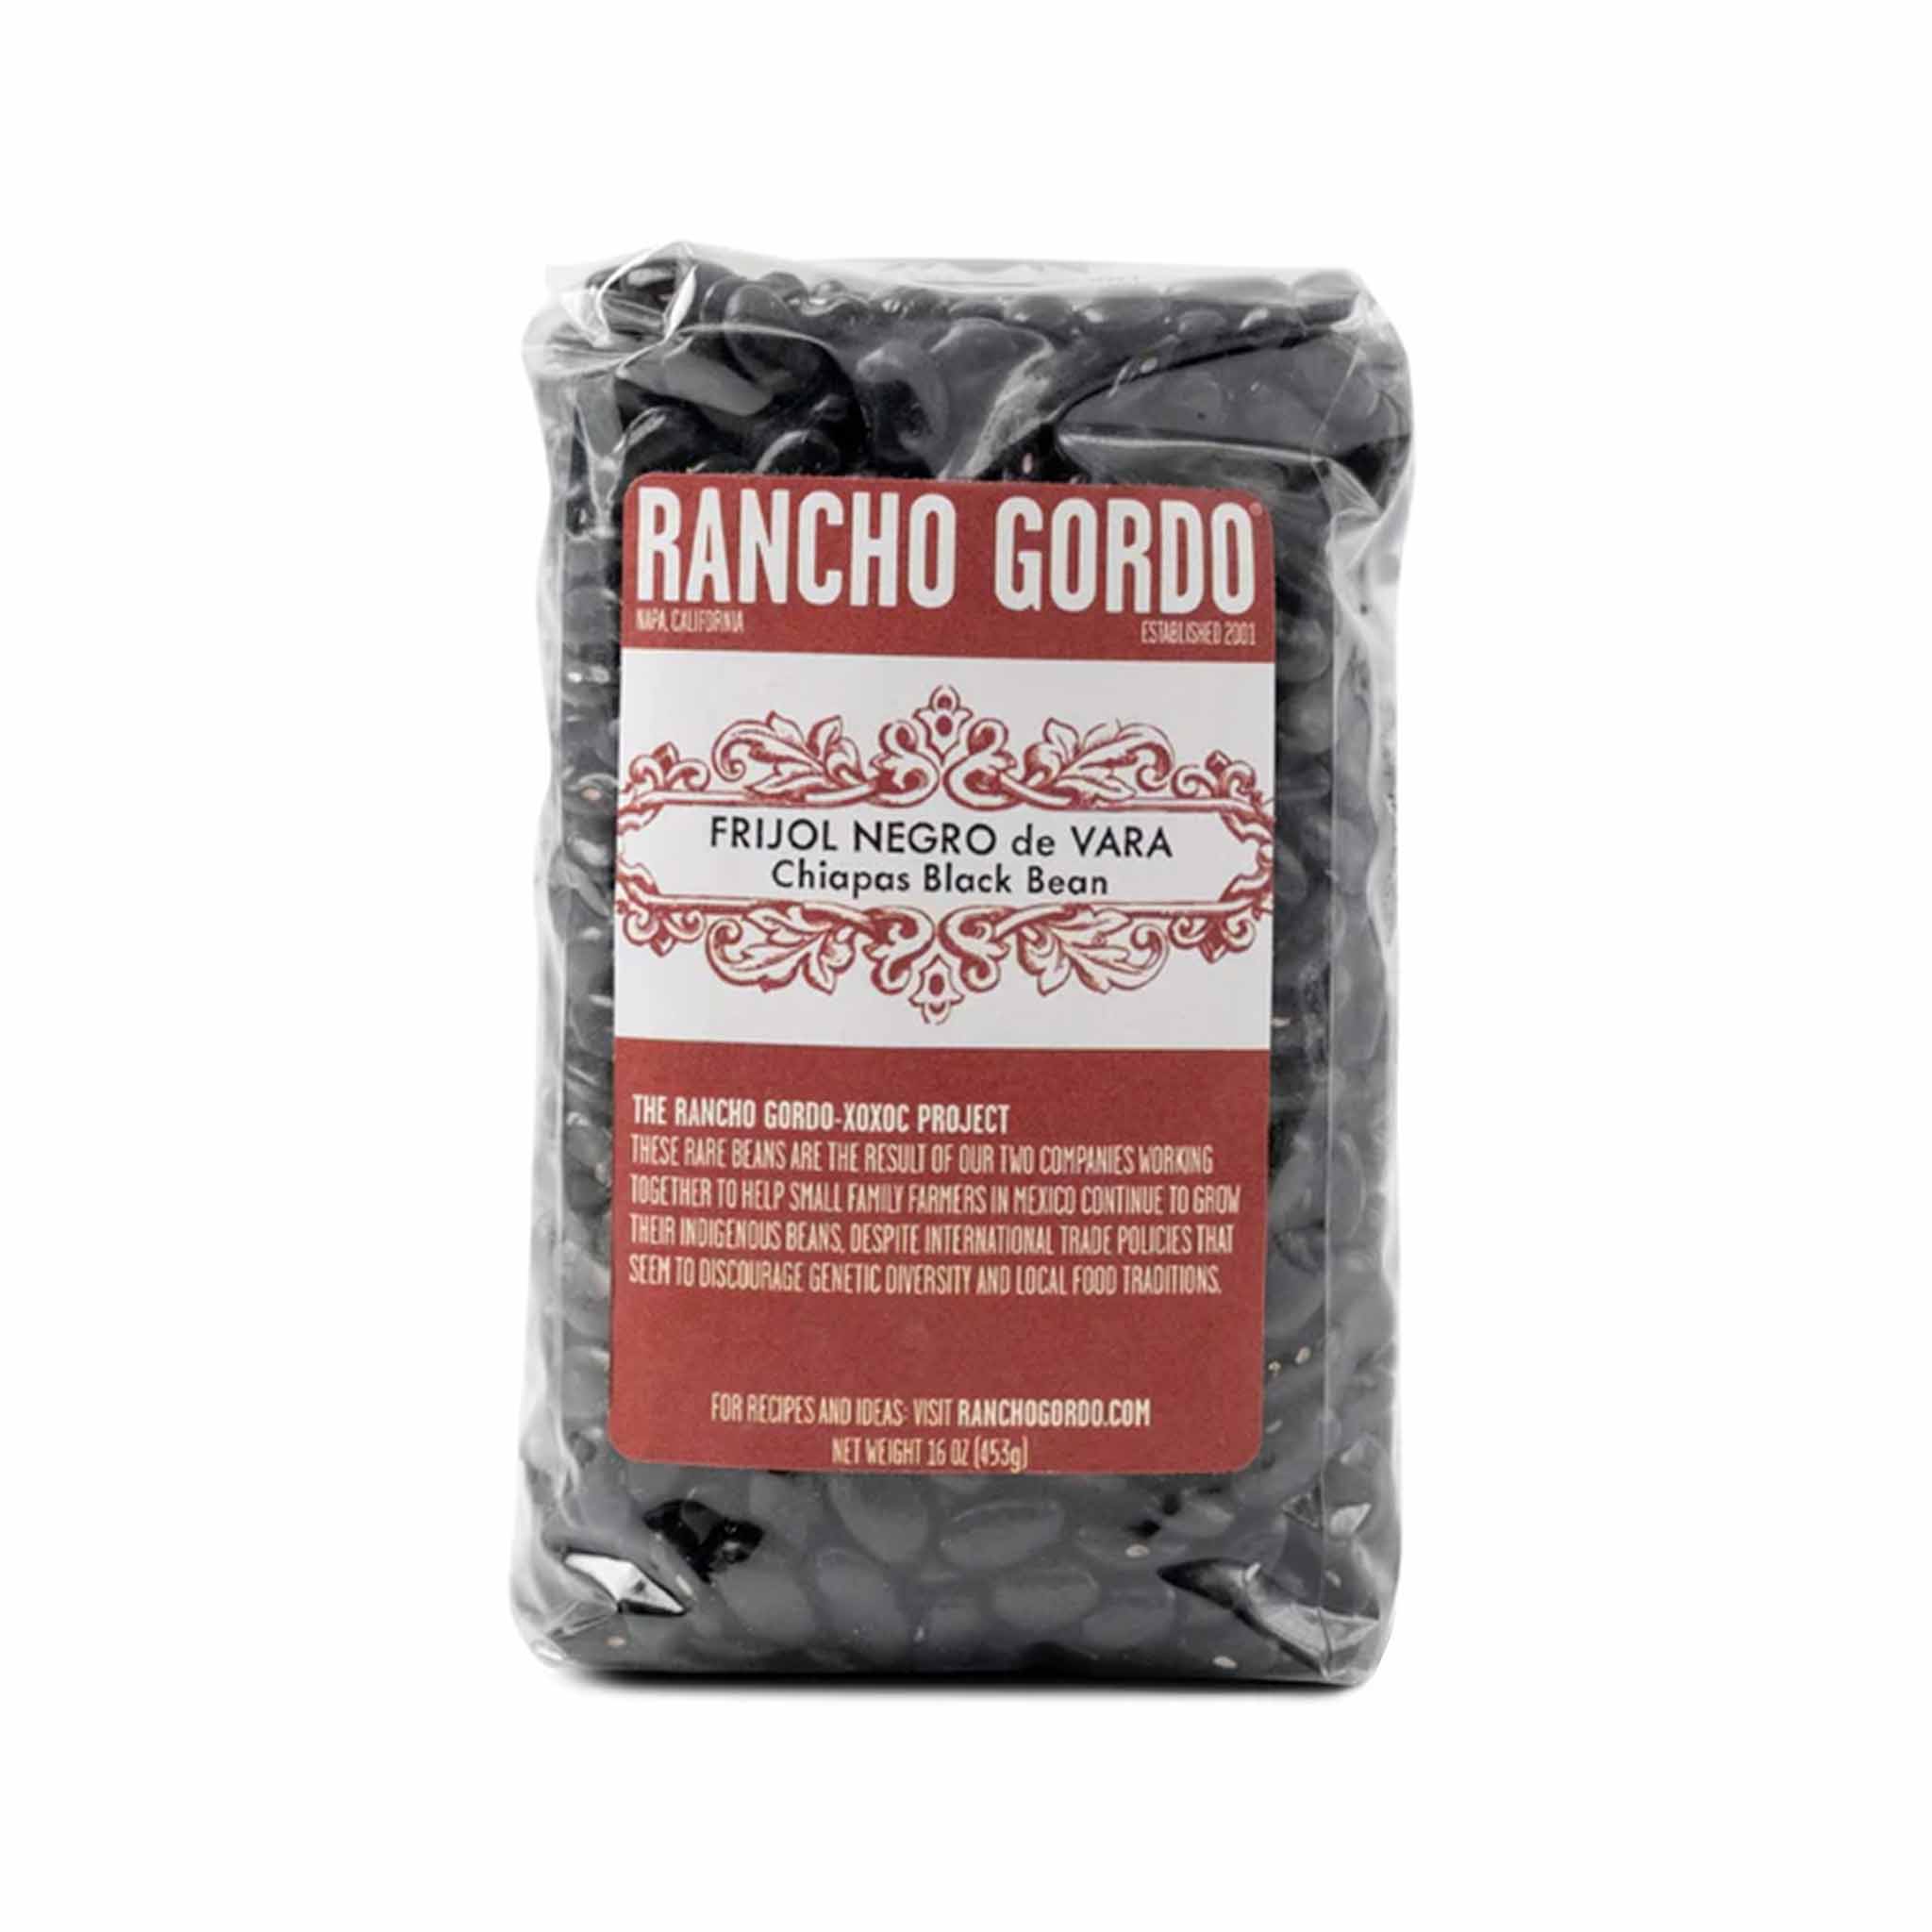 Rancho Gordo Chiapas Black Beans Frijol Negro de Vara